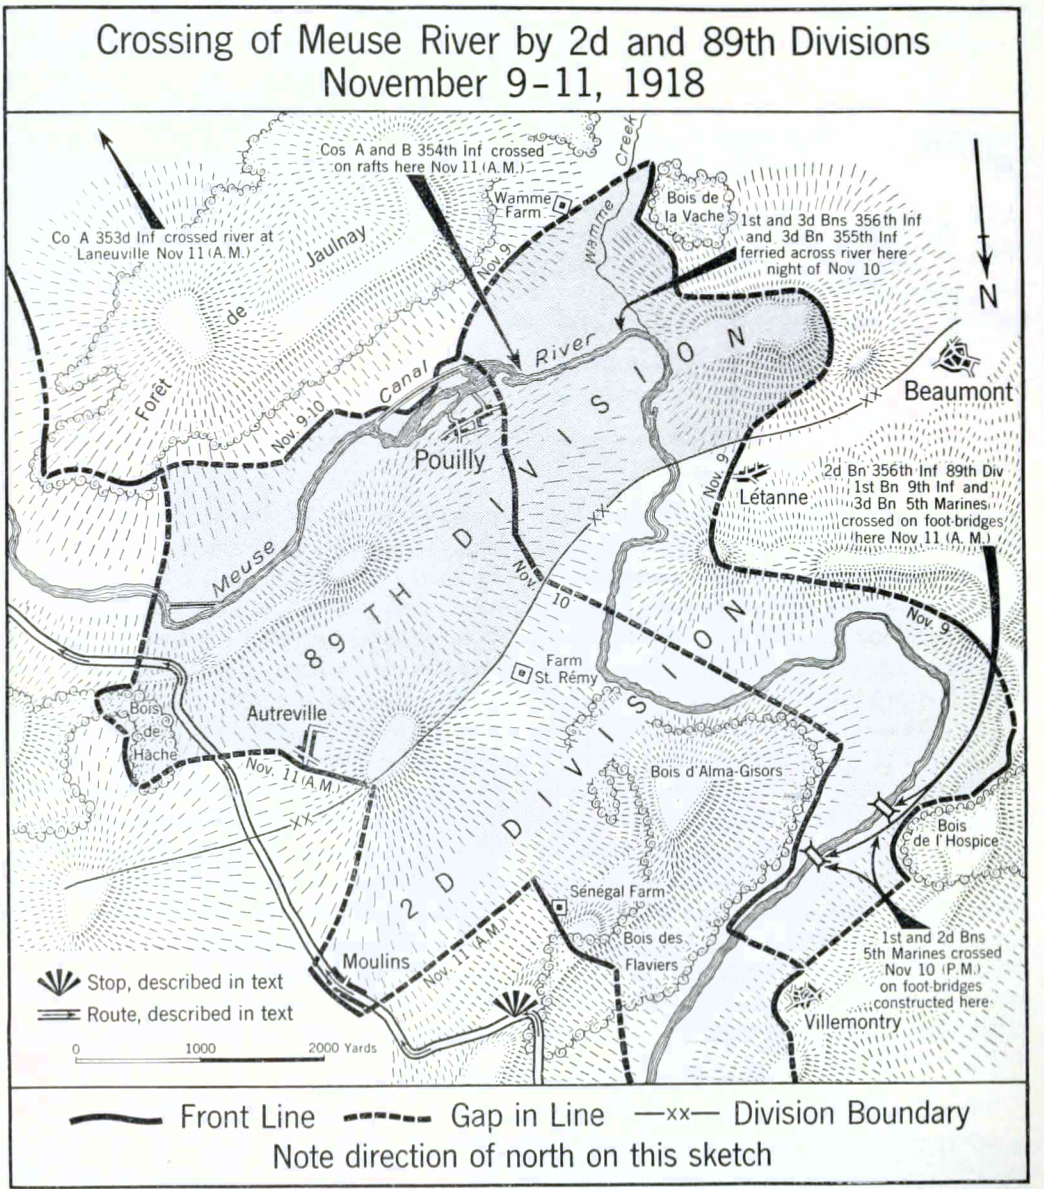 Map ABMC - Crossing Meuse 2d+89th Divs 9-11 Nov, showing Beaumont